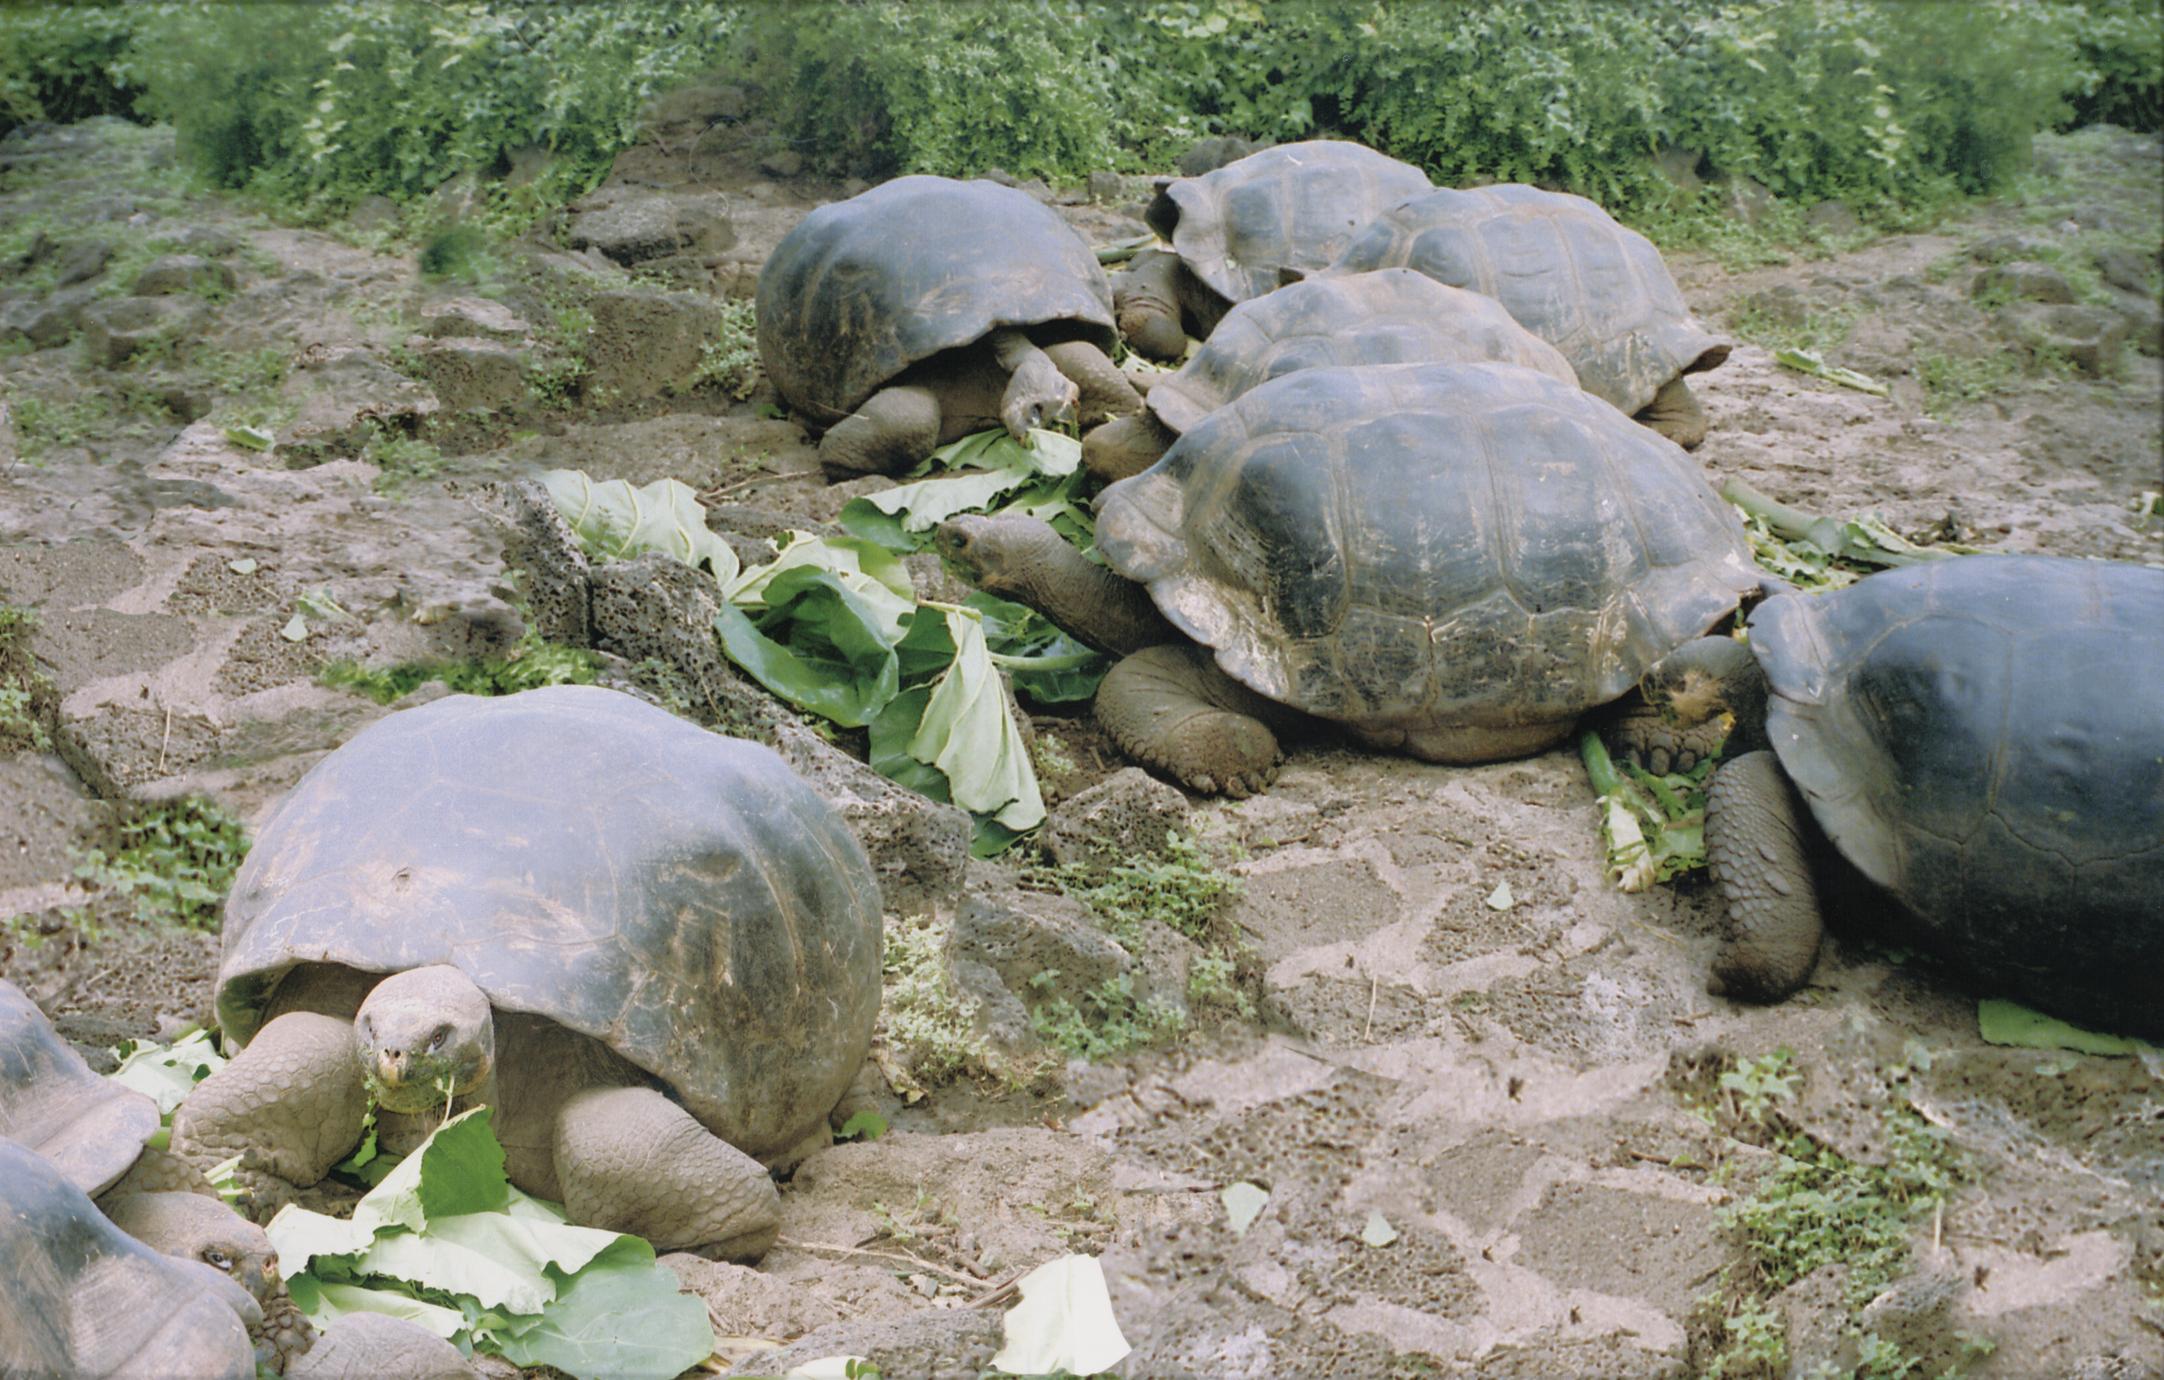 Galápagos Tortoises (Geochelone elephantopus)